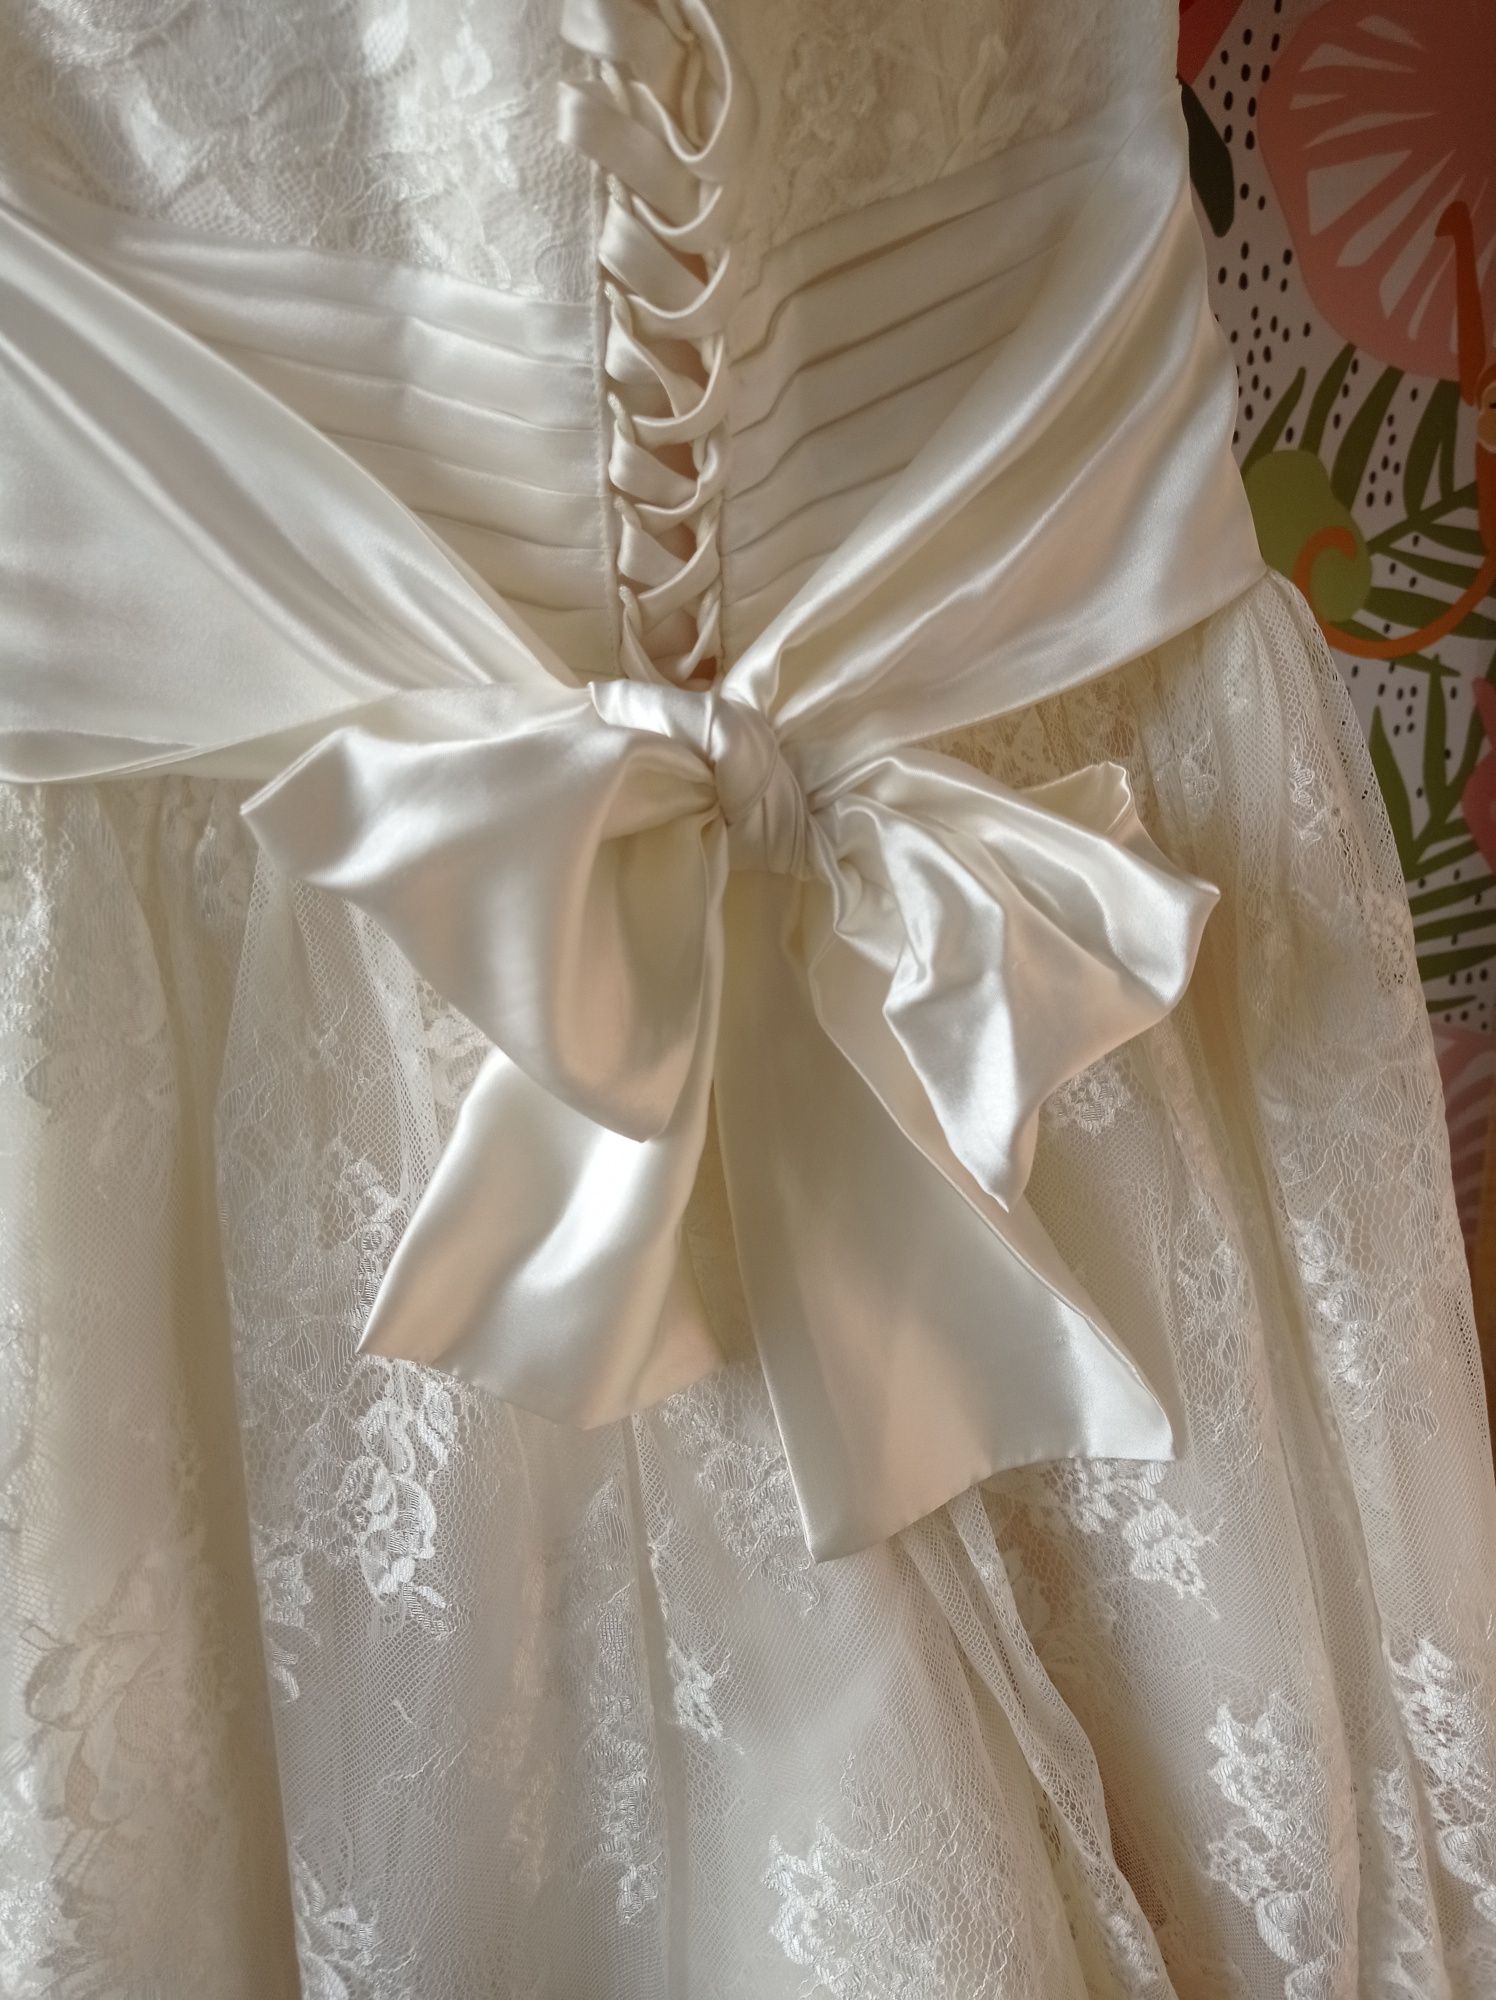 Коротка весільна сукня Lovestory